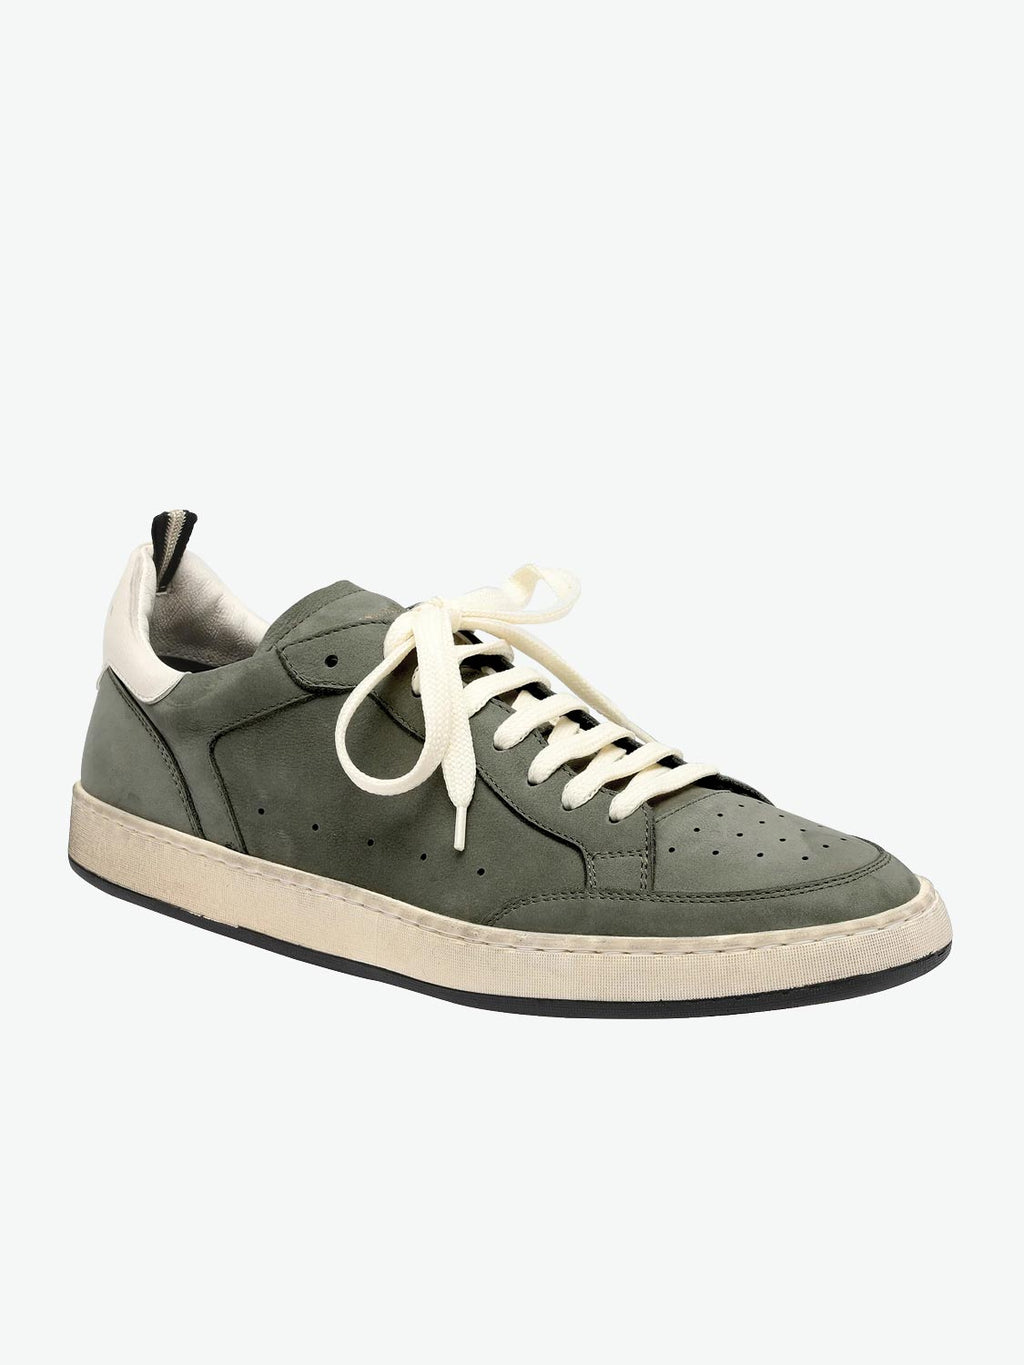 Officine Creative Kareem Military Green Leather Sneakers | SAB